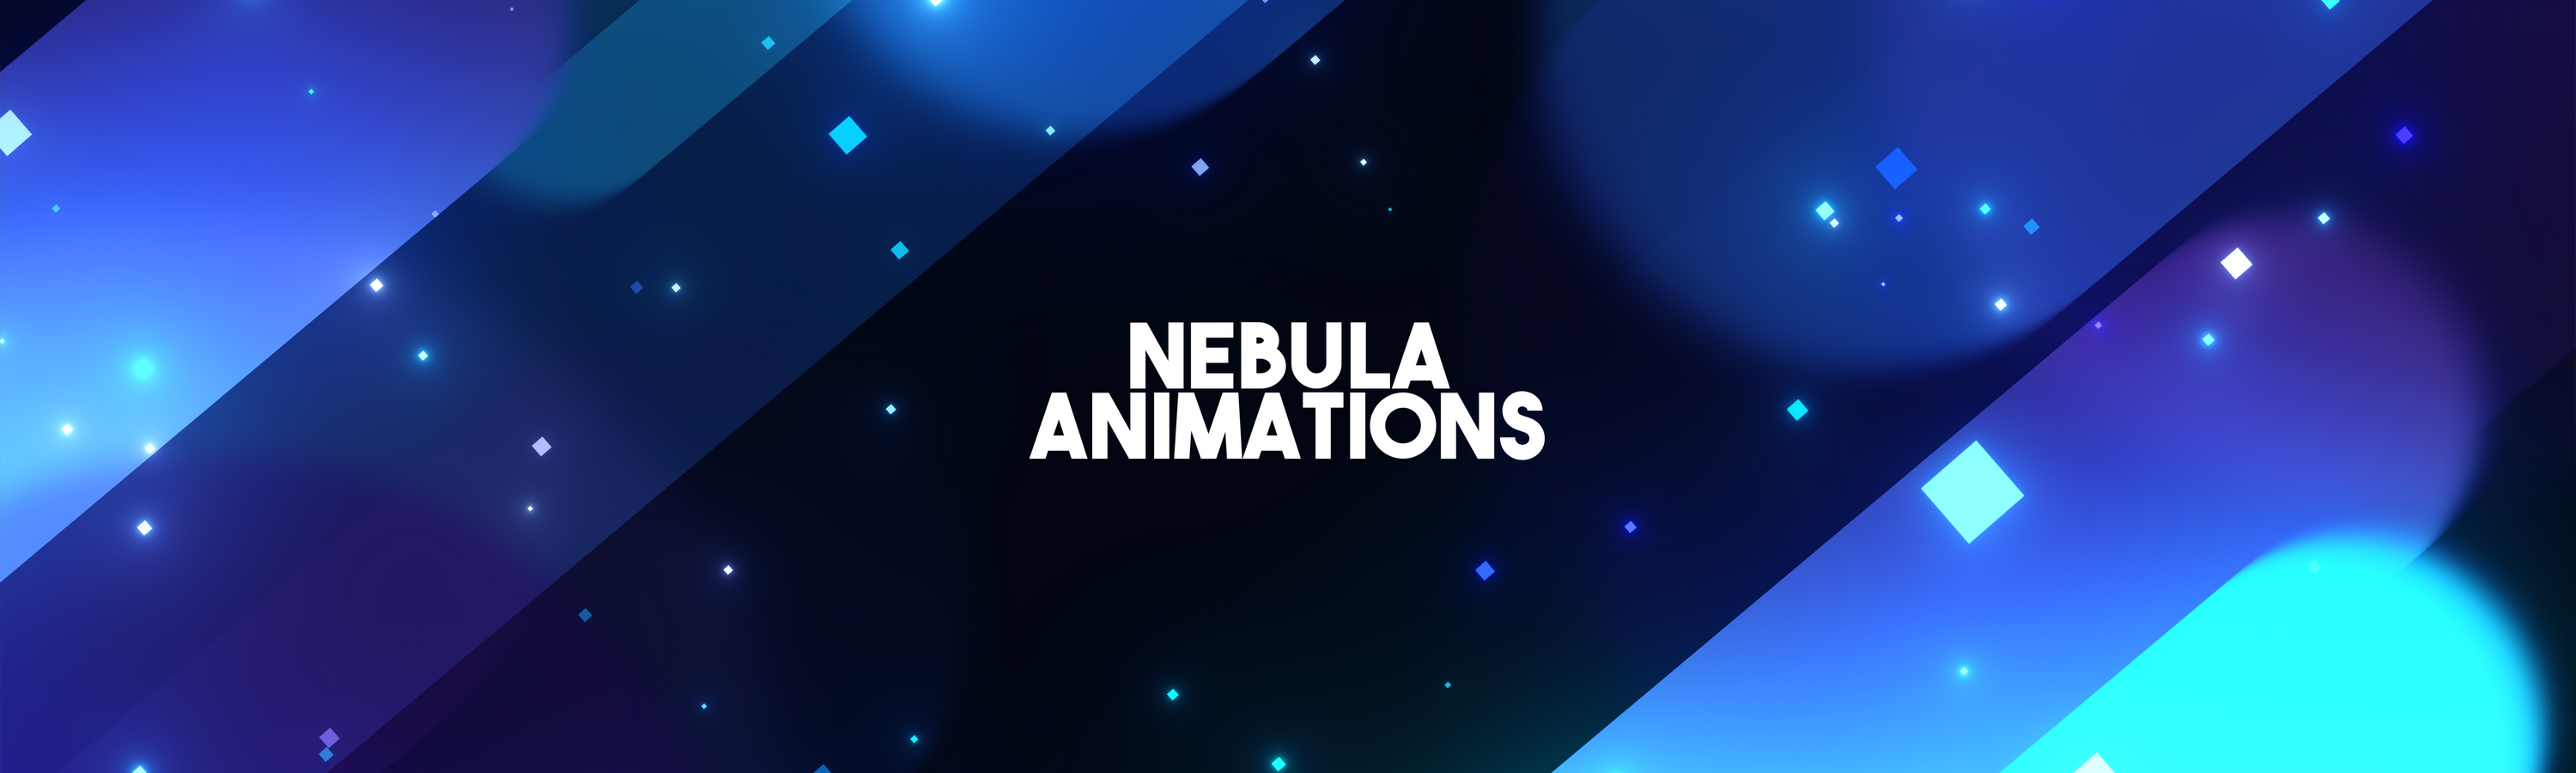 Nebula Animations